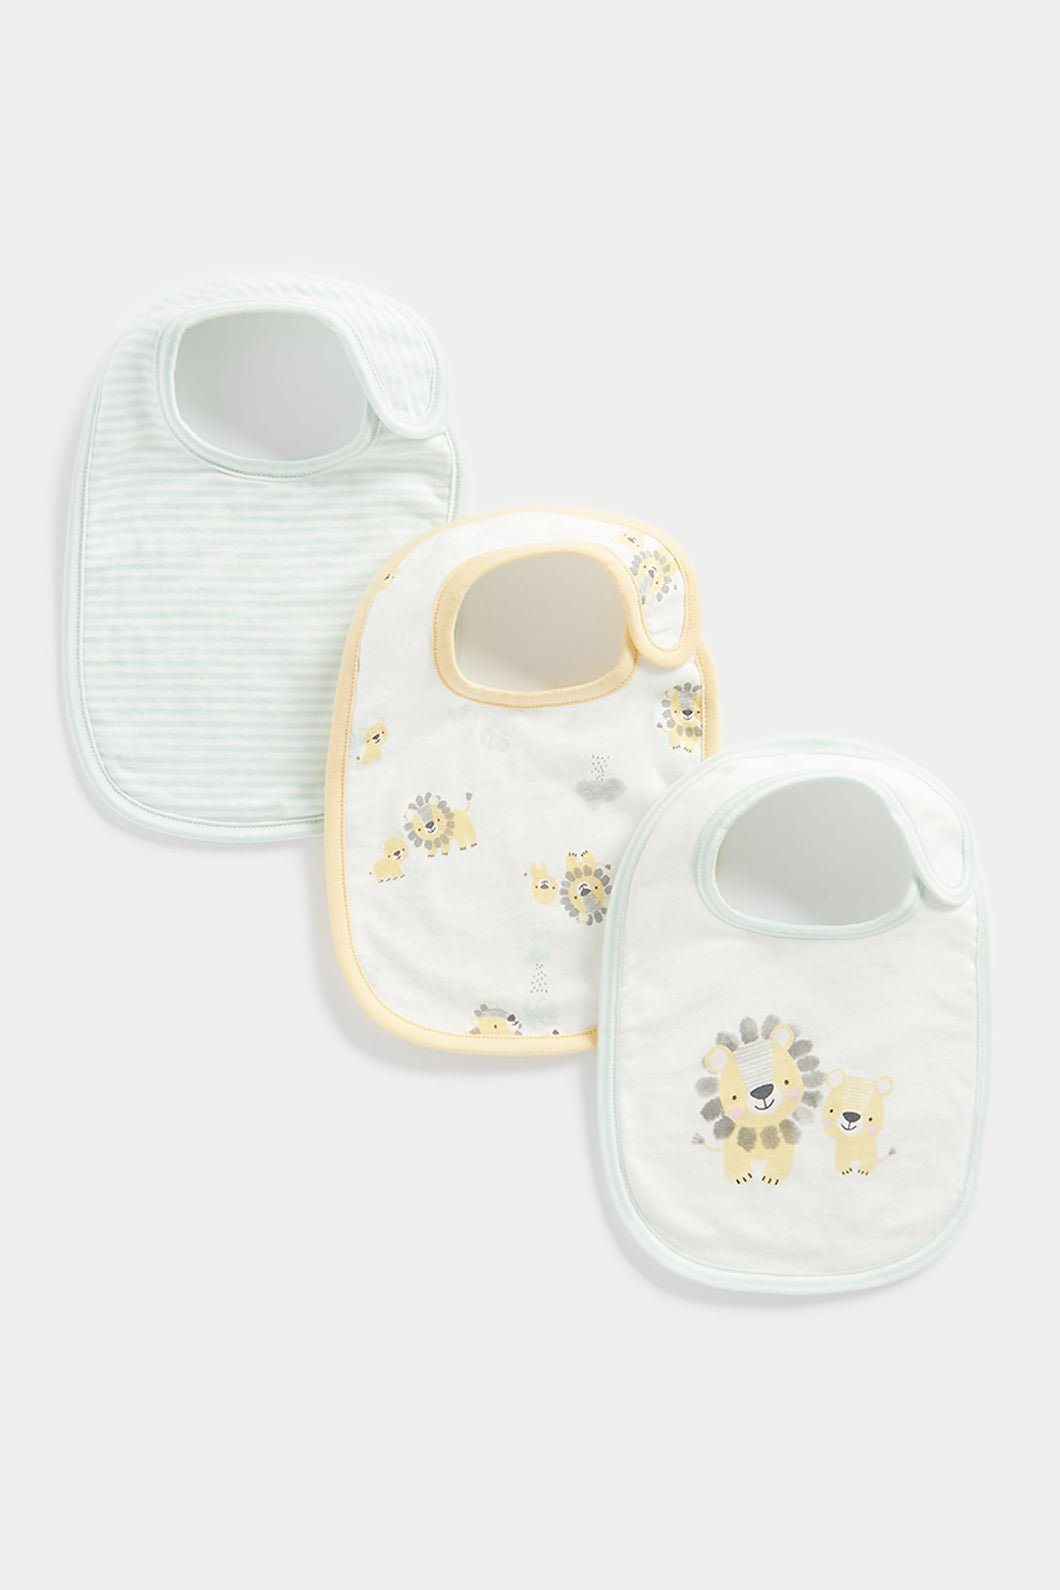 Mothercare Lion Newborn Bibs - 3 Pack